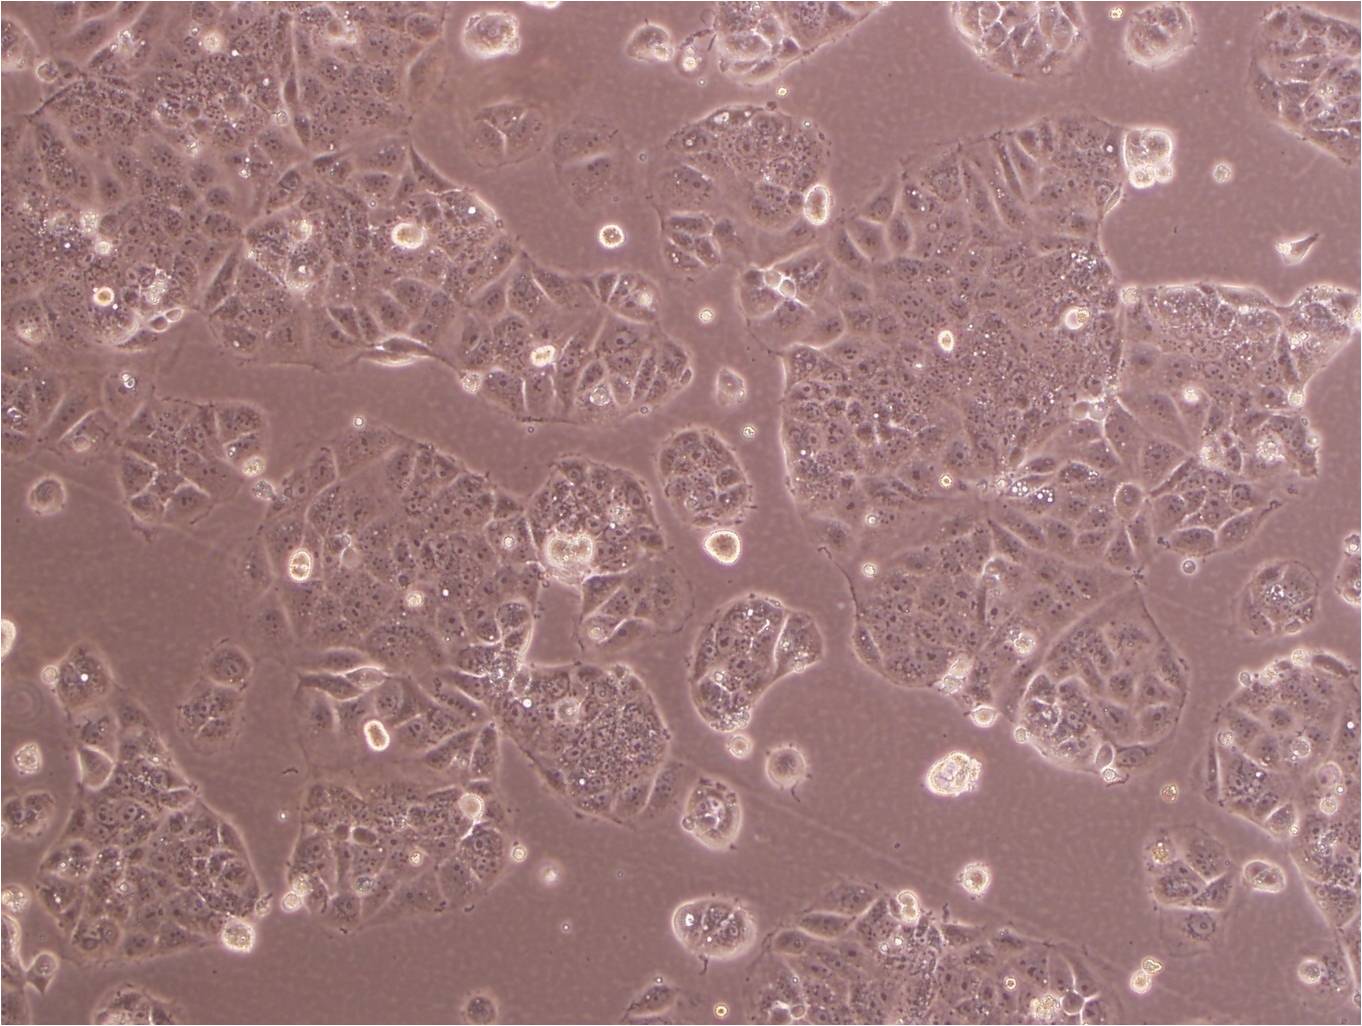 HCCLM3 epithelioid cells高转移人肝癌细胞系